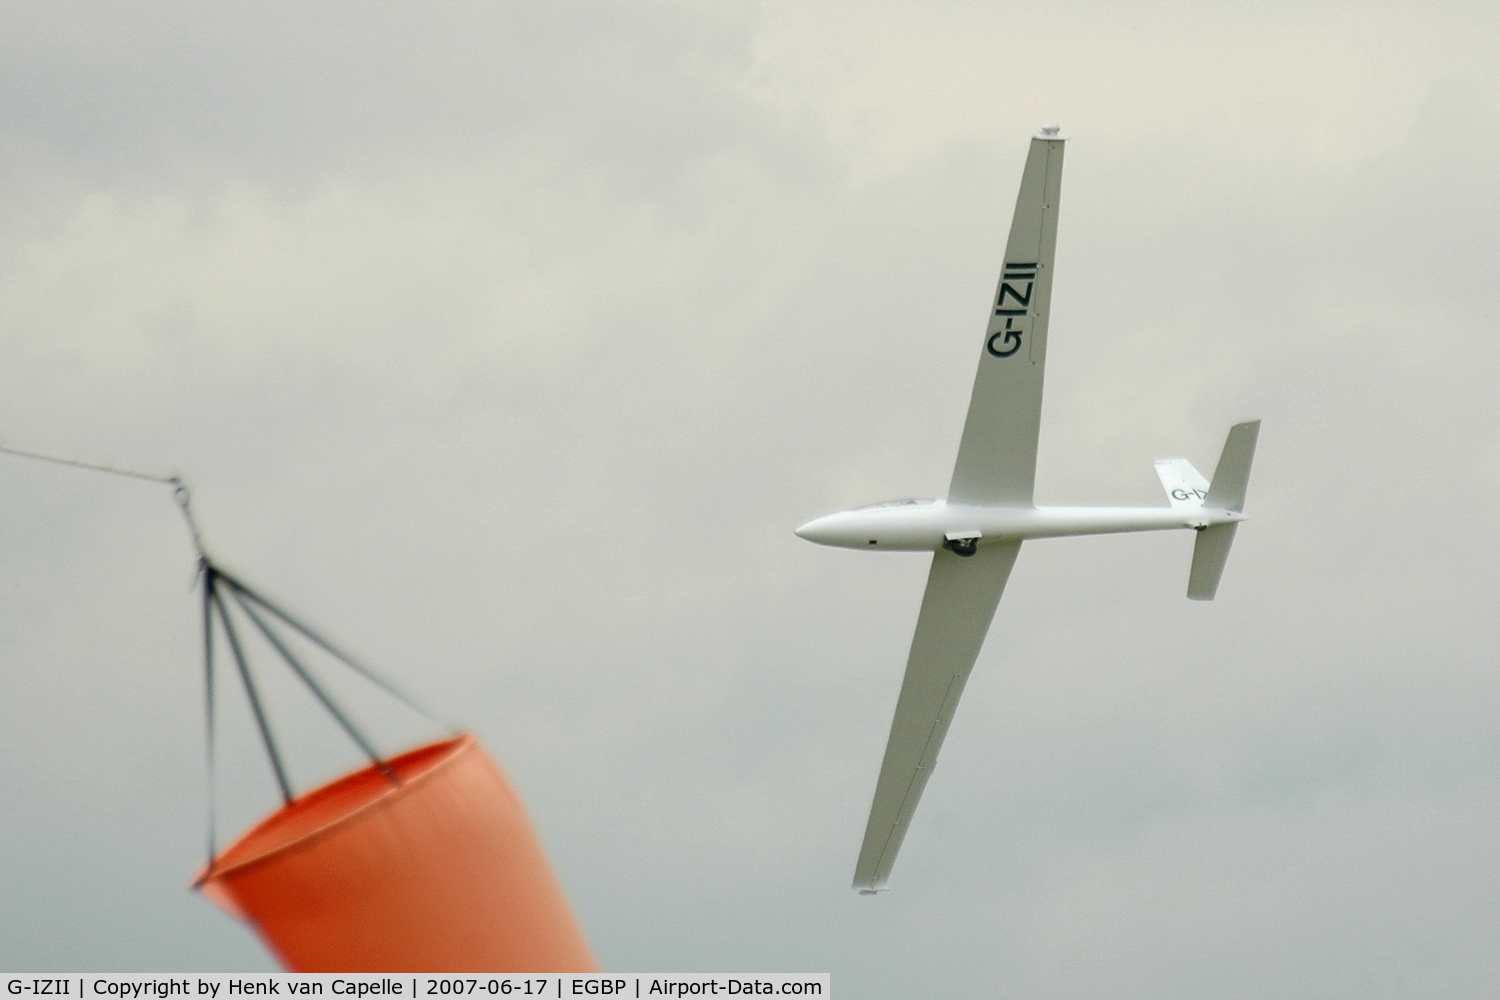 G-IZII, 1993 Marganski Swift S-1 C/N 110, Swift S-1 aerobatic glider